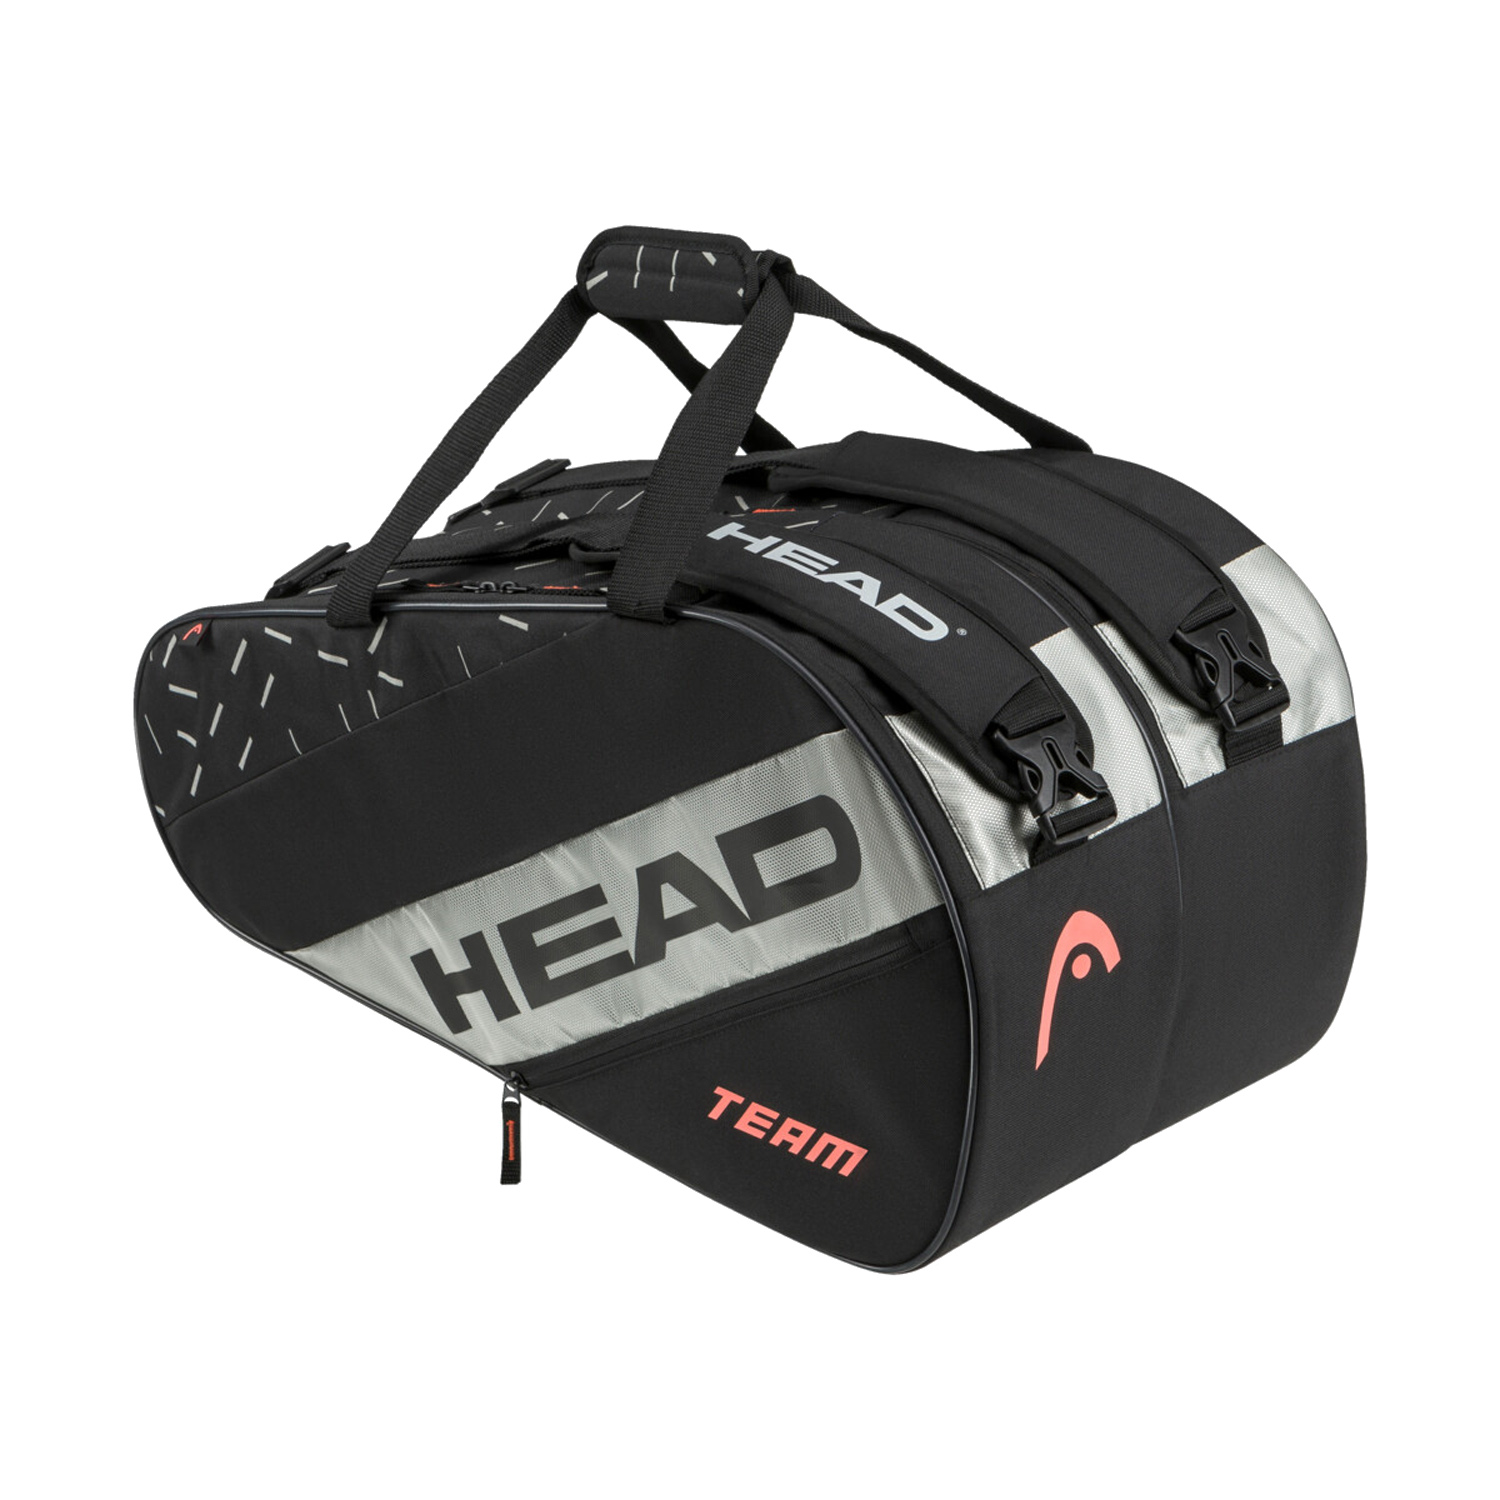 Head Team Large Bag - Black/Ceramic